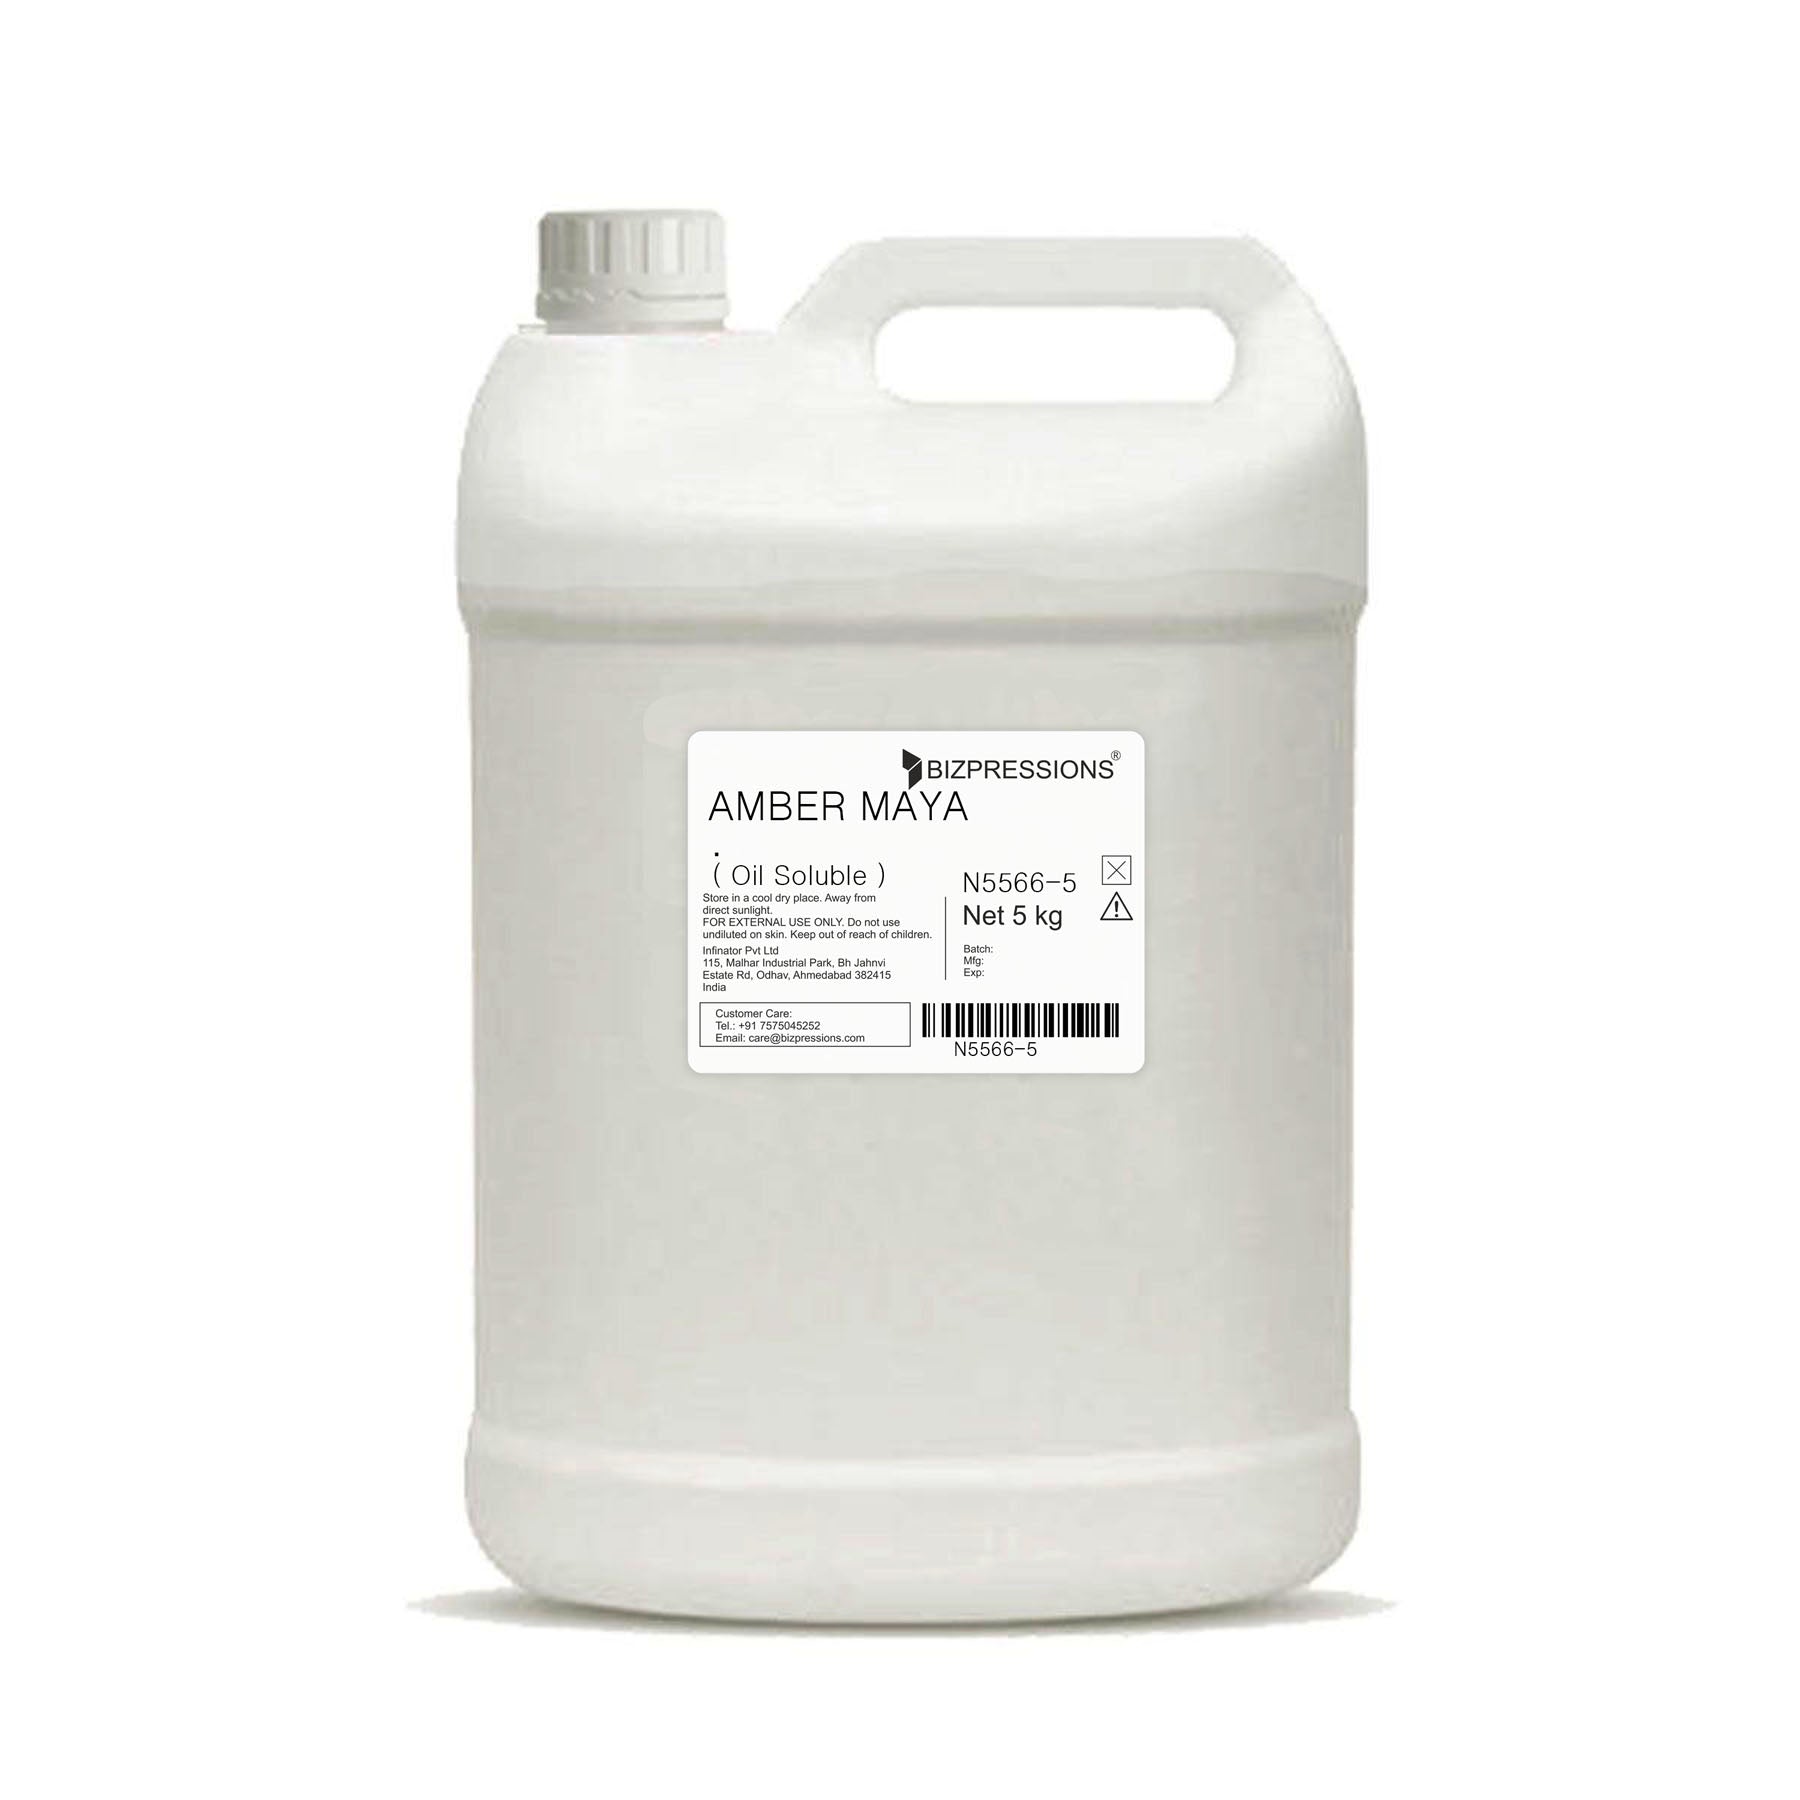 AMBER MAYA - Fragrance ( Oil Soluble ) - 5 kg